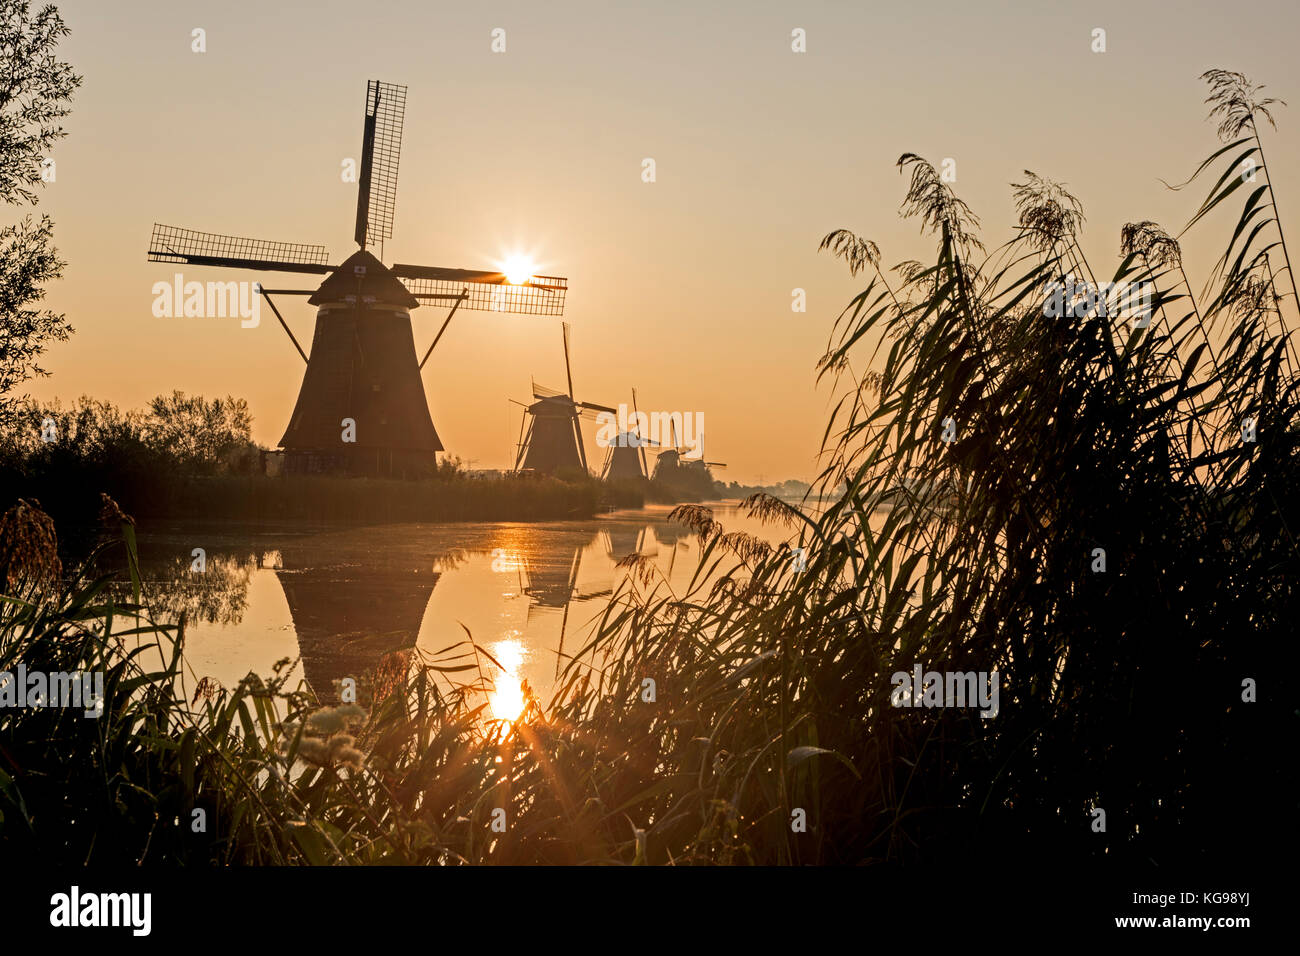 Historic windmills, UNESCO World Heritage Site, Kinderdijk, South Netherlands, Netherland, Europe Stock Photo